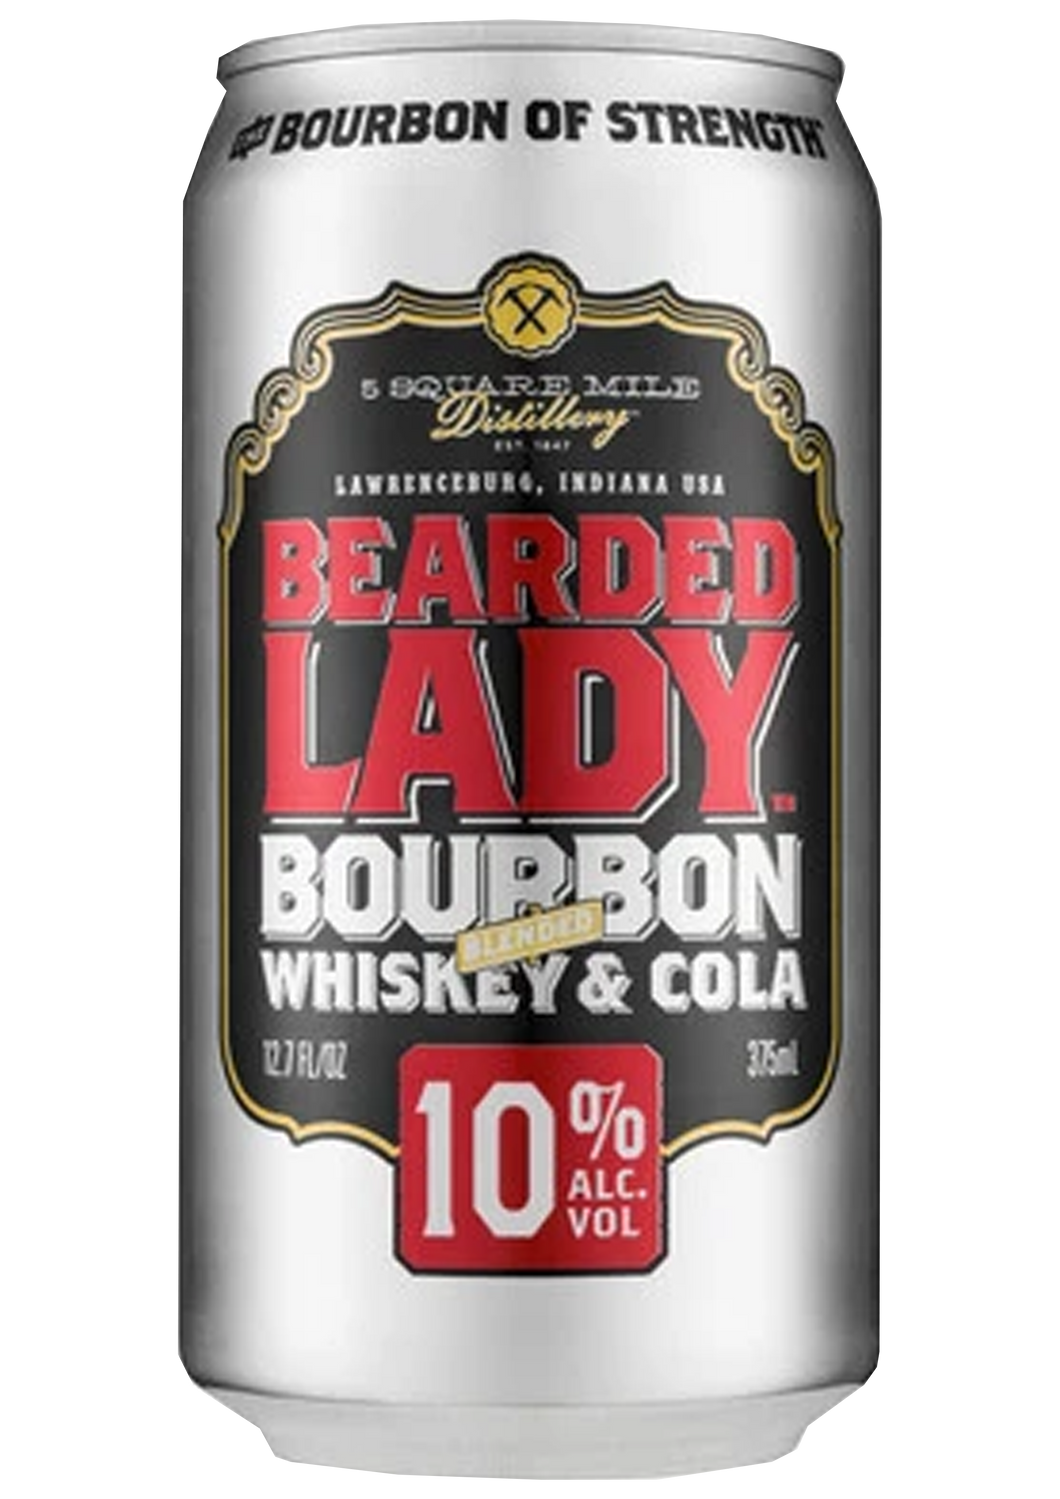 Bearded Lady 10%